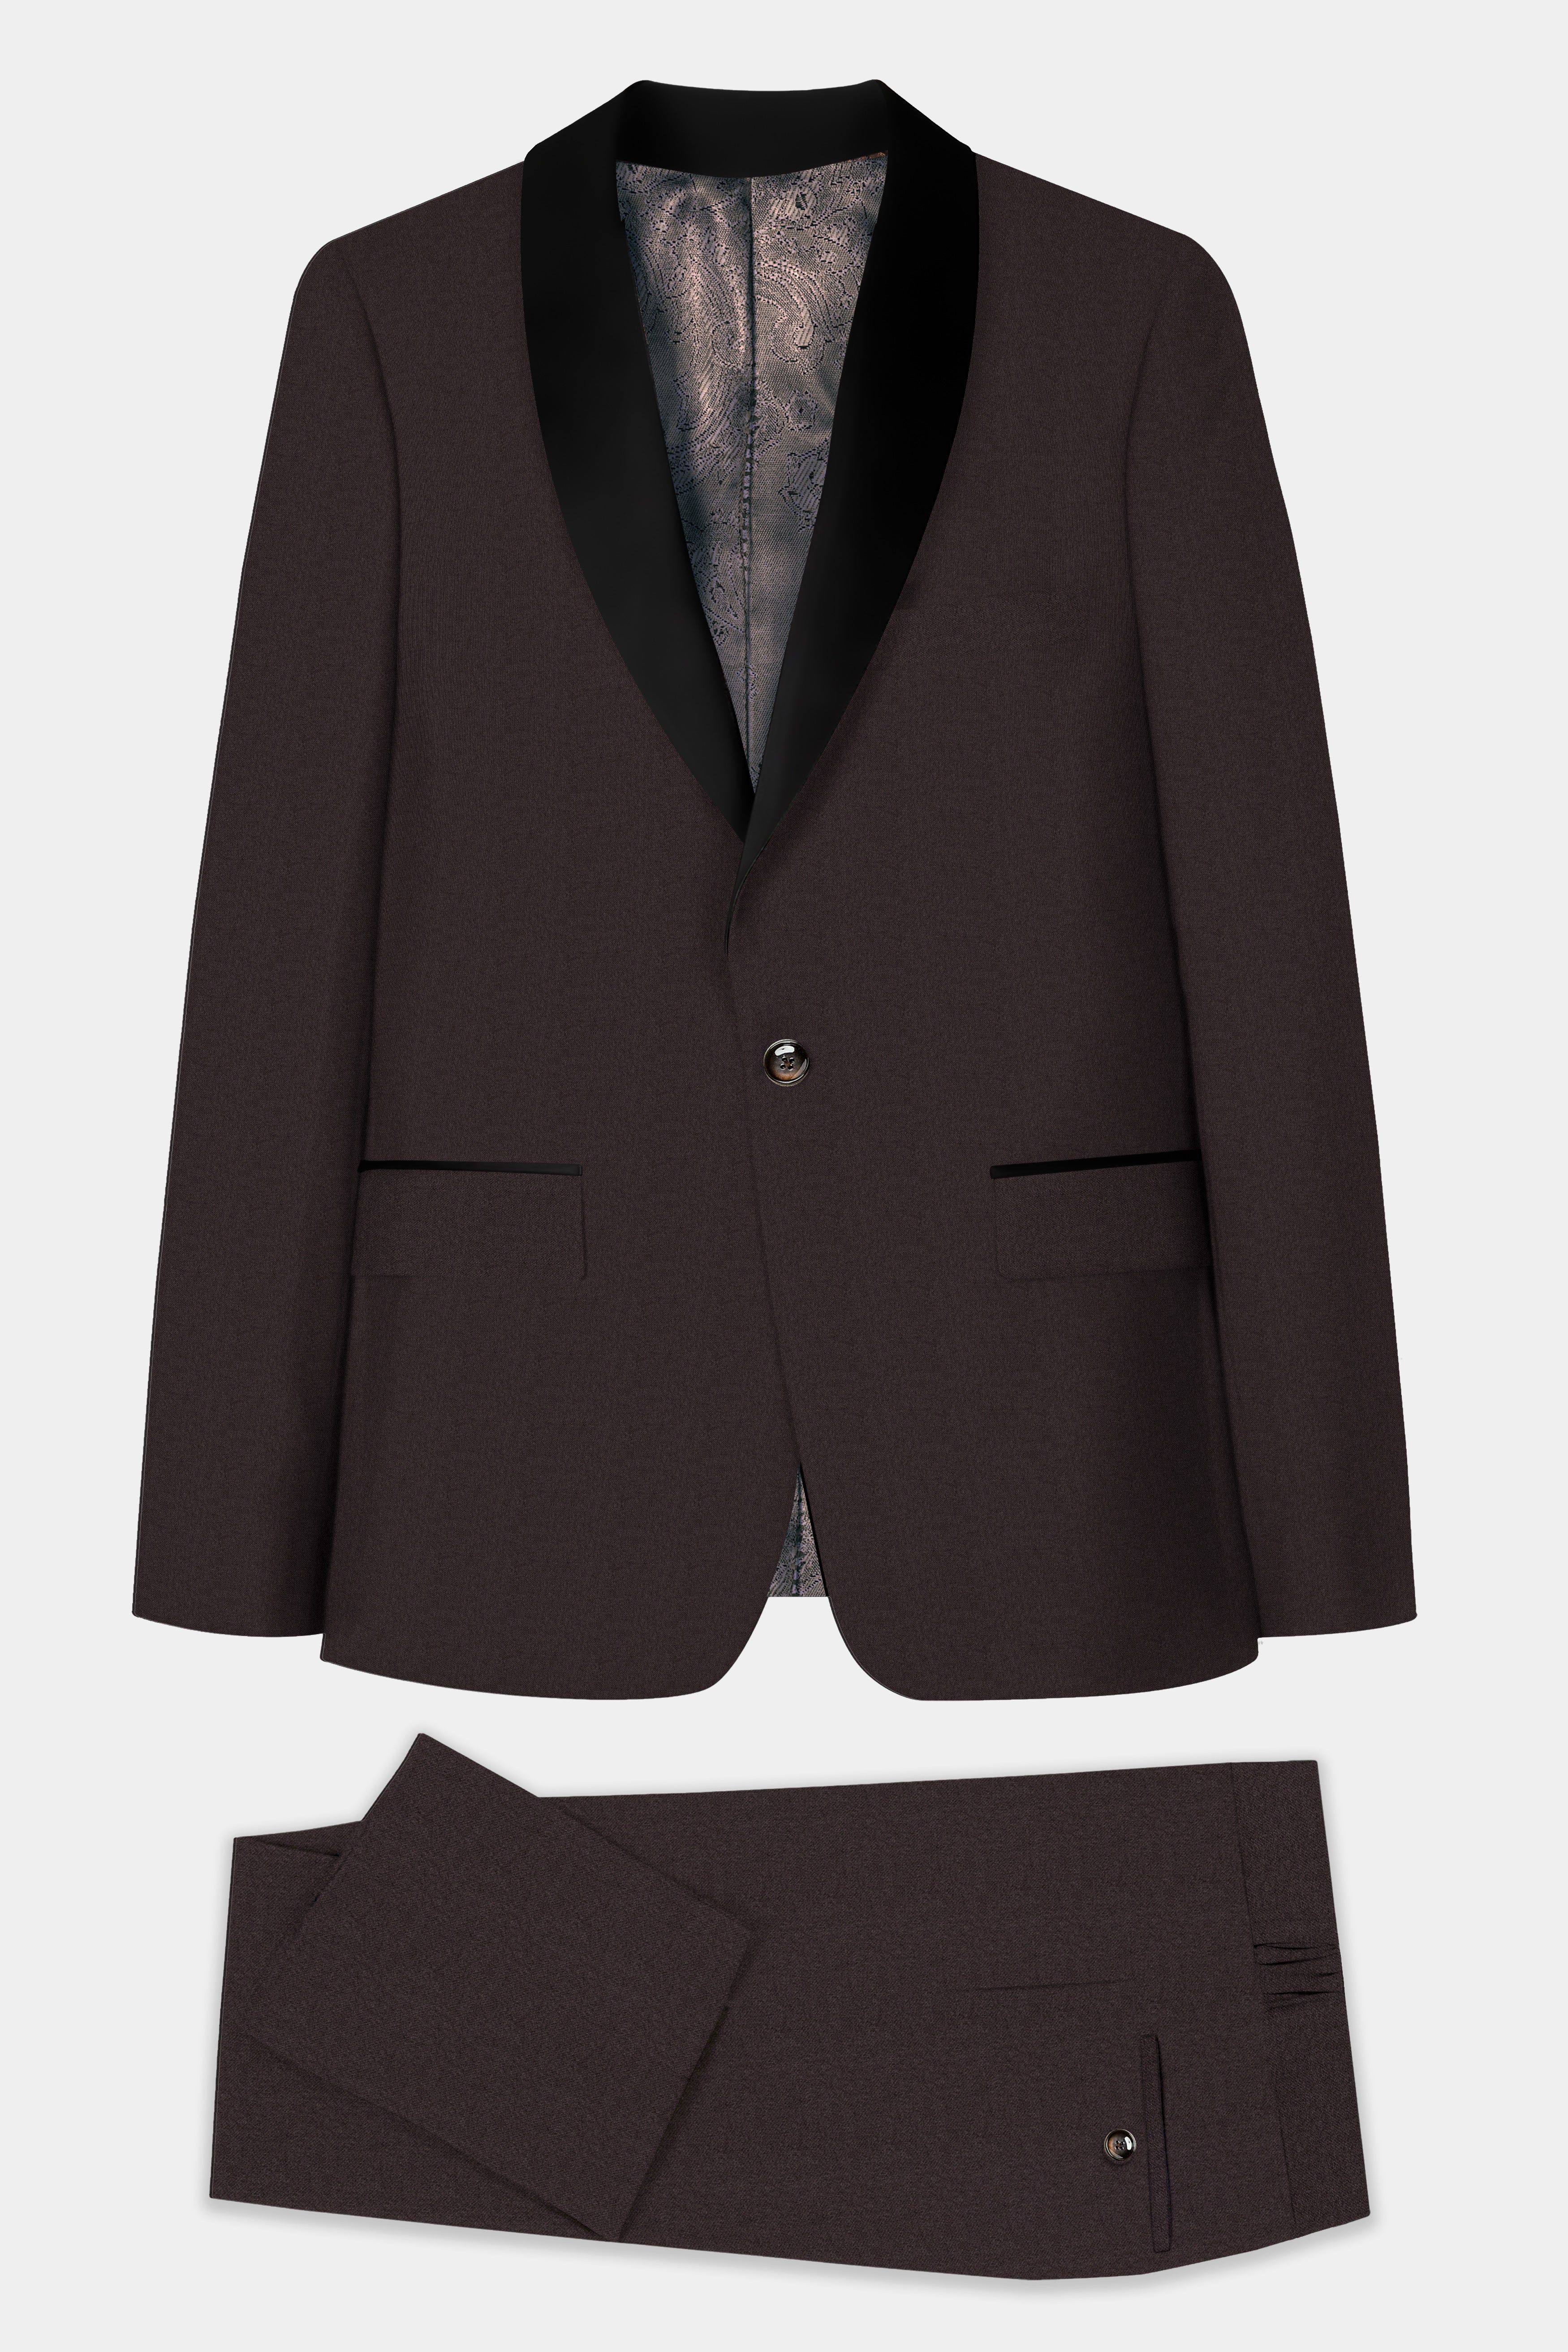 Birch Brown Wool Rich Tuxedo Suit